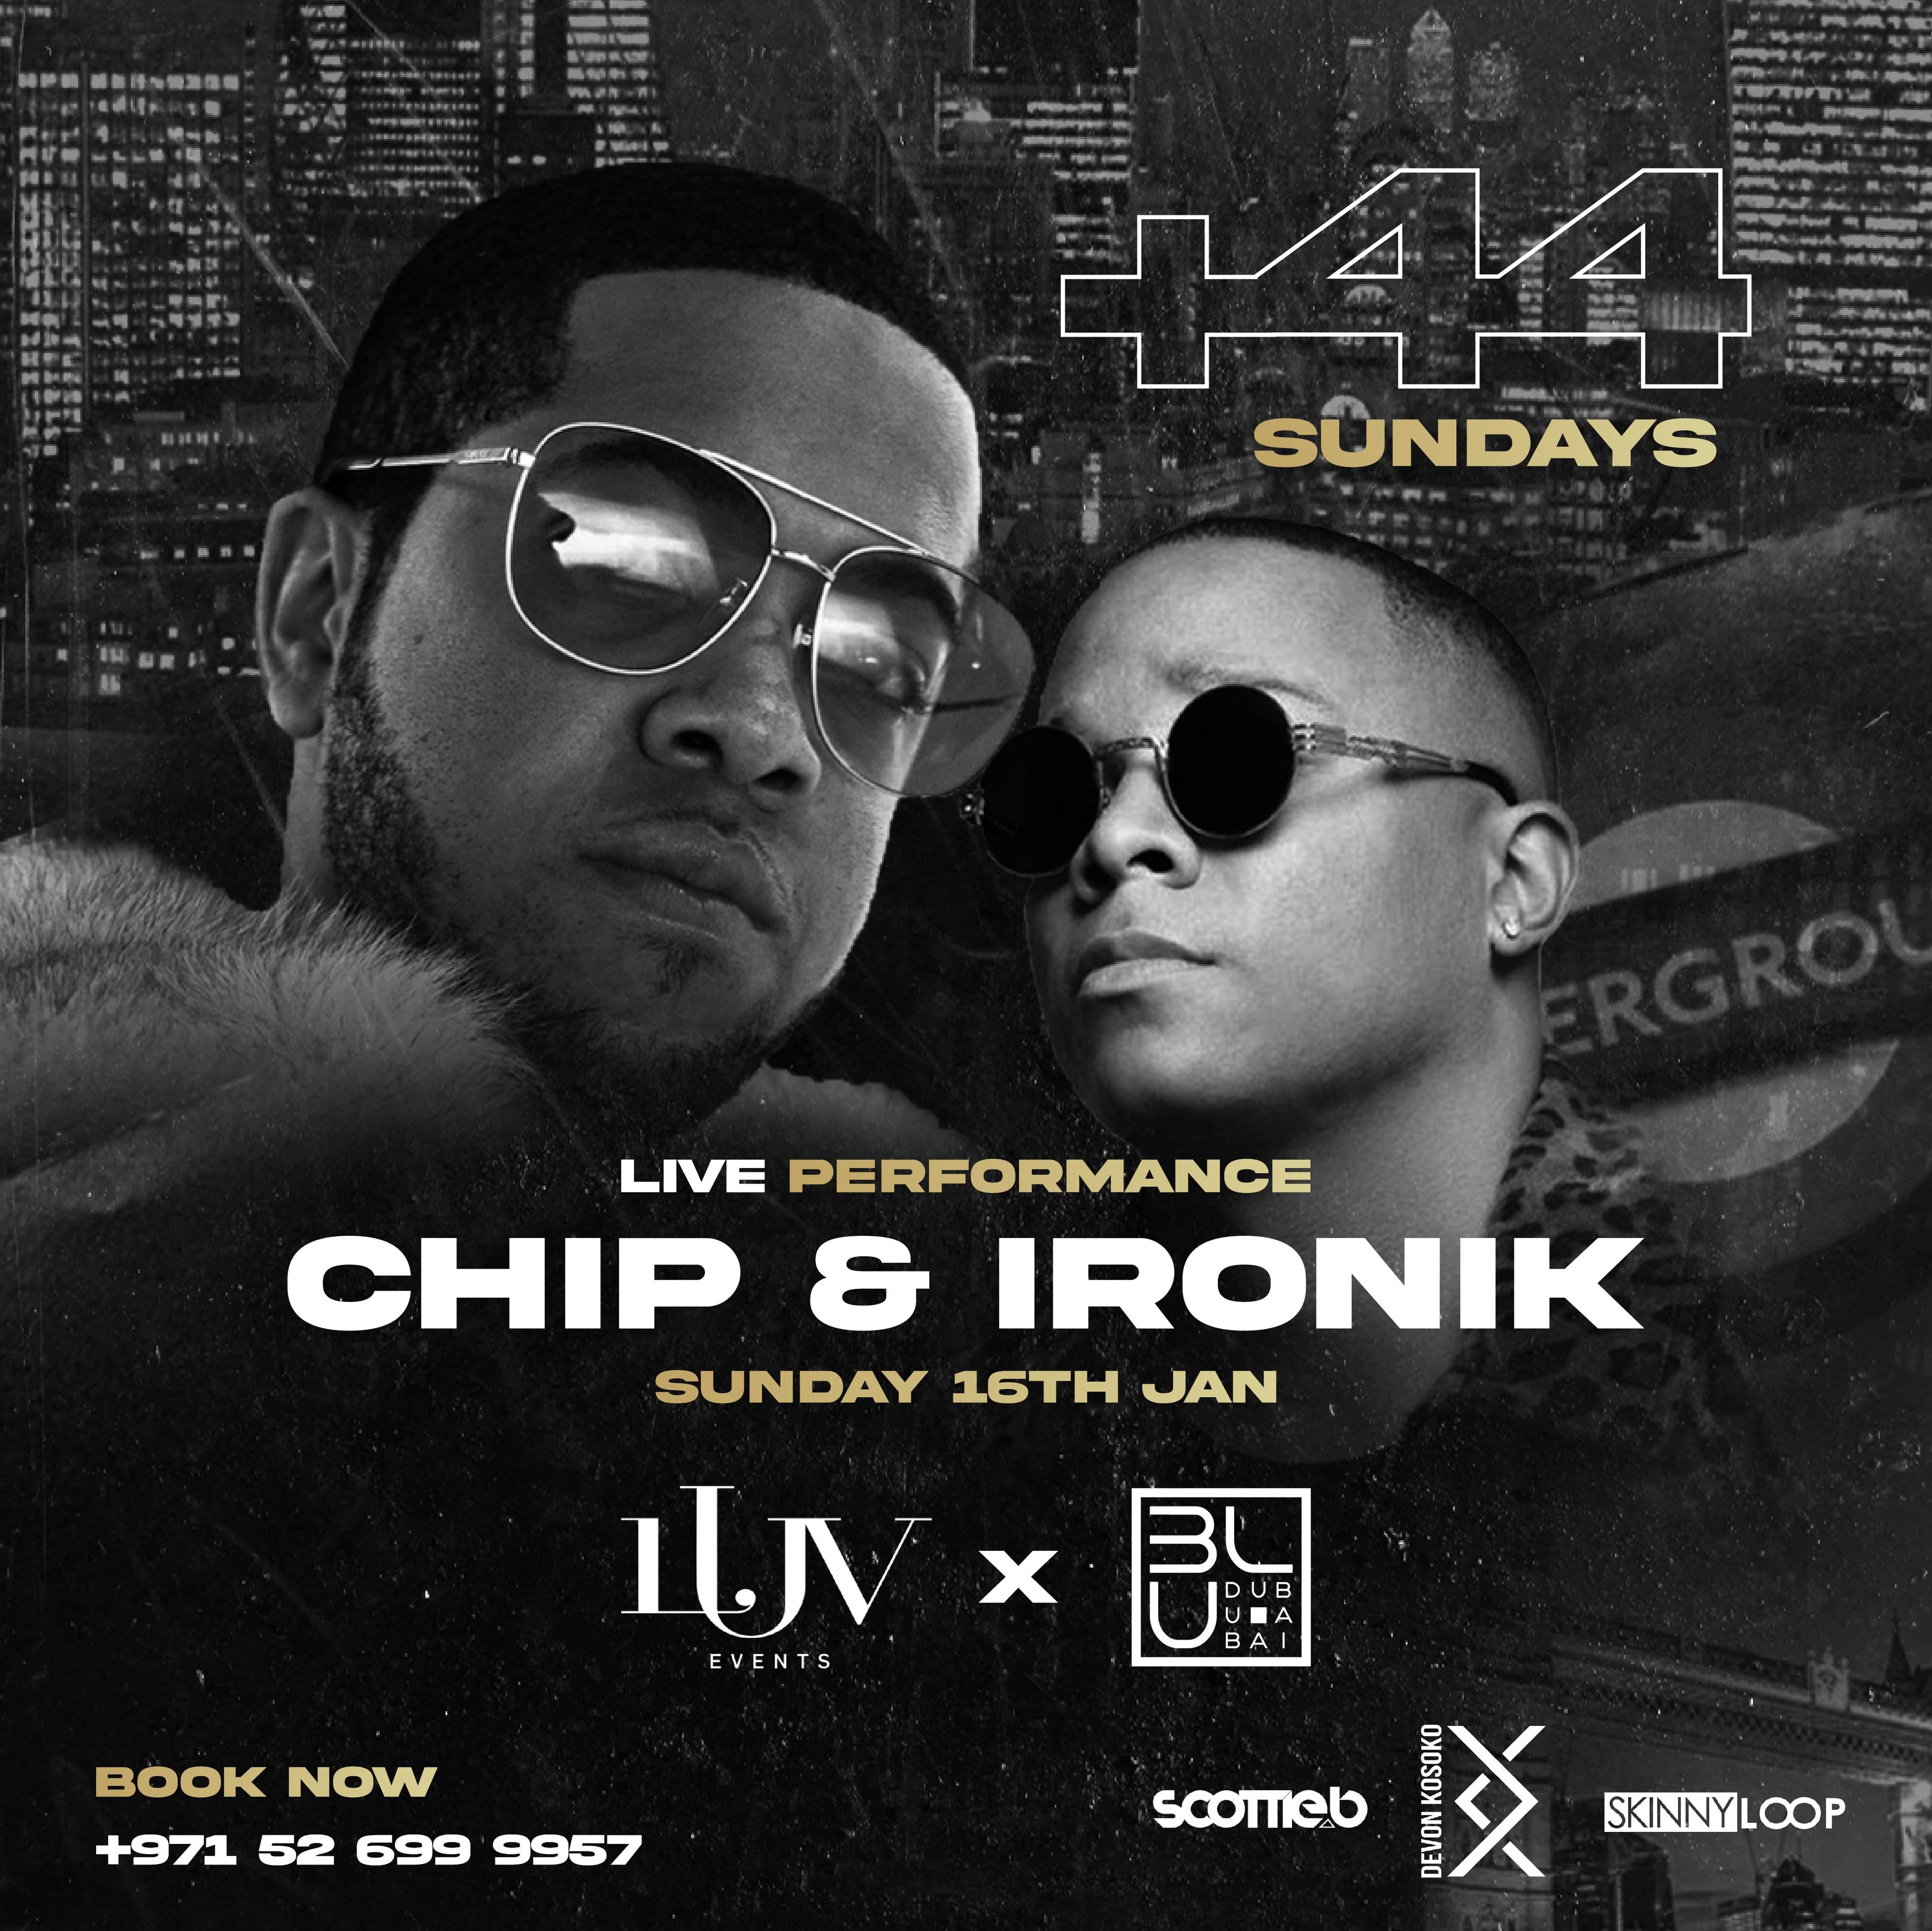 +44 with Chip & Ironik LIVE | 16.01.22 | BLU Dubai x LUV Events